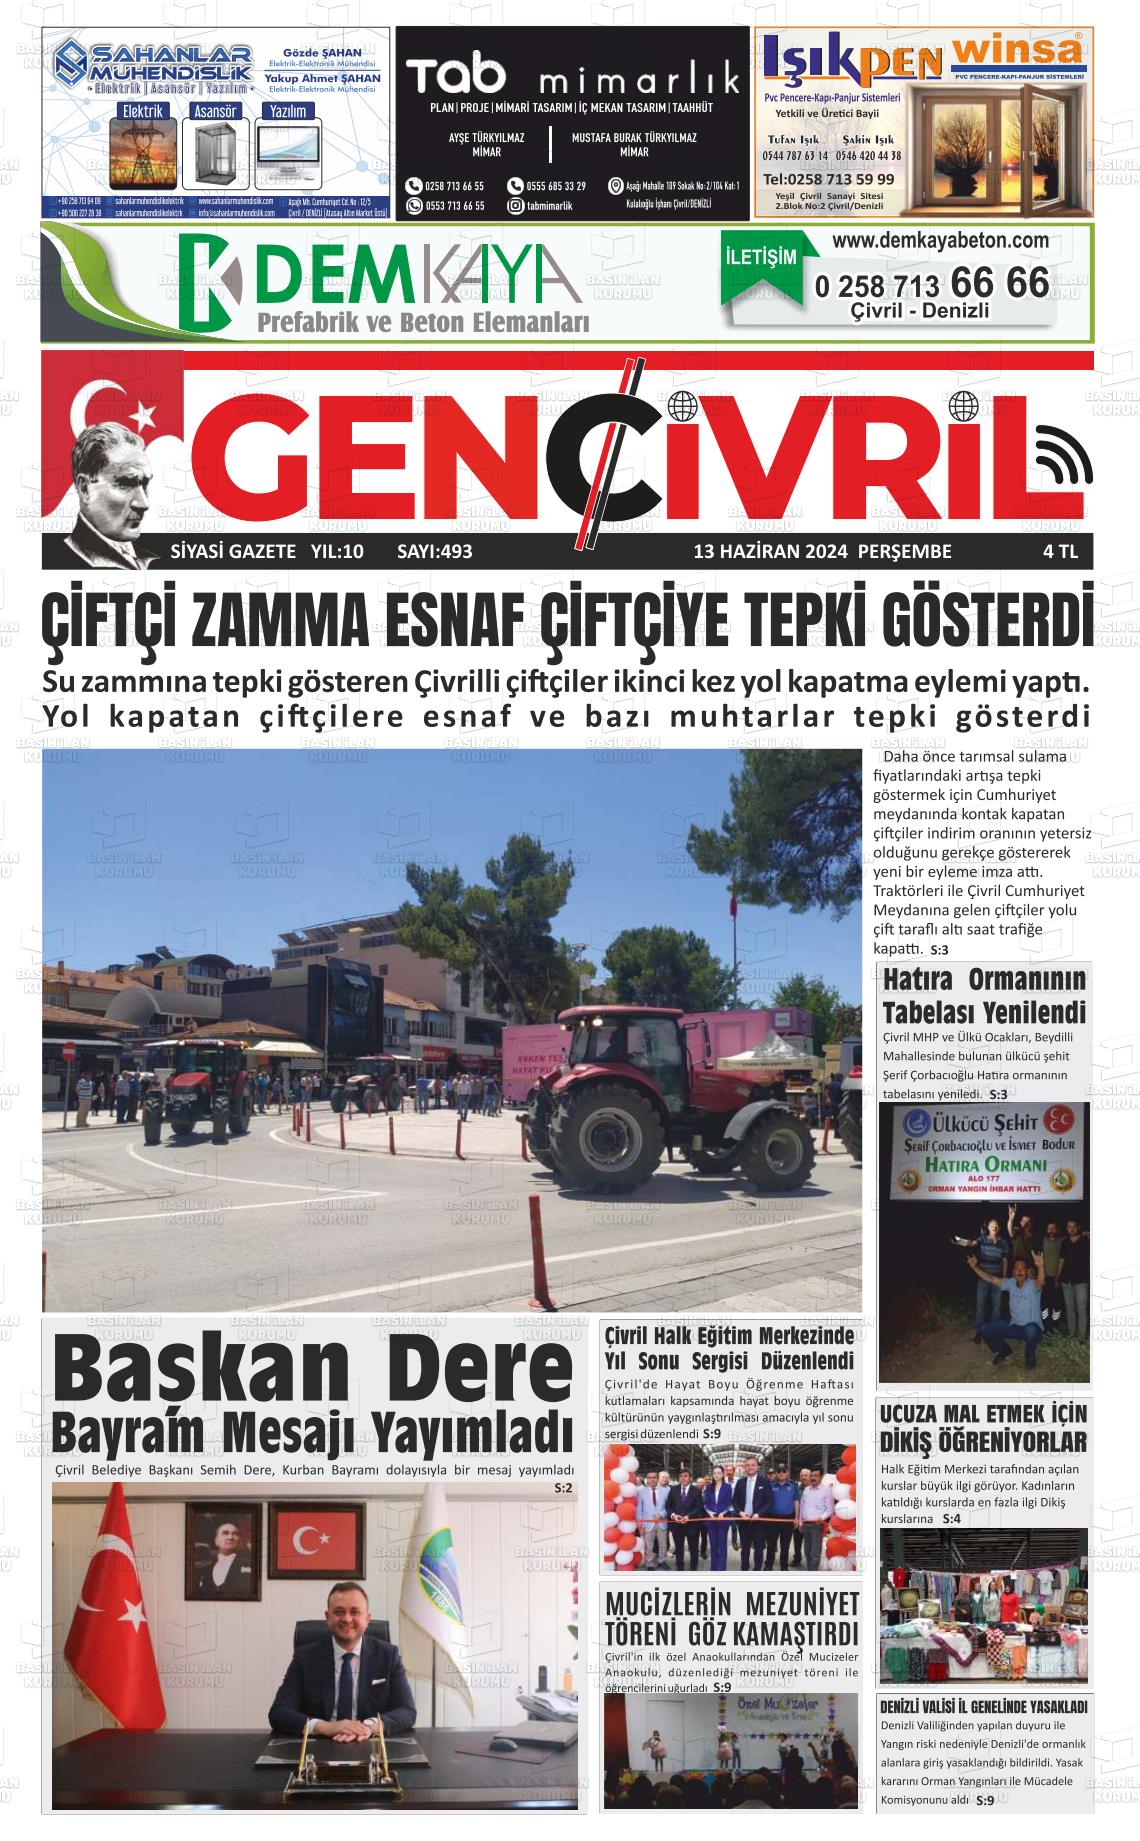 GENÇ ÇİVRİL Gazetesi